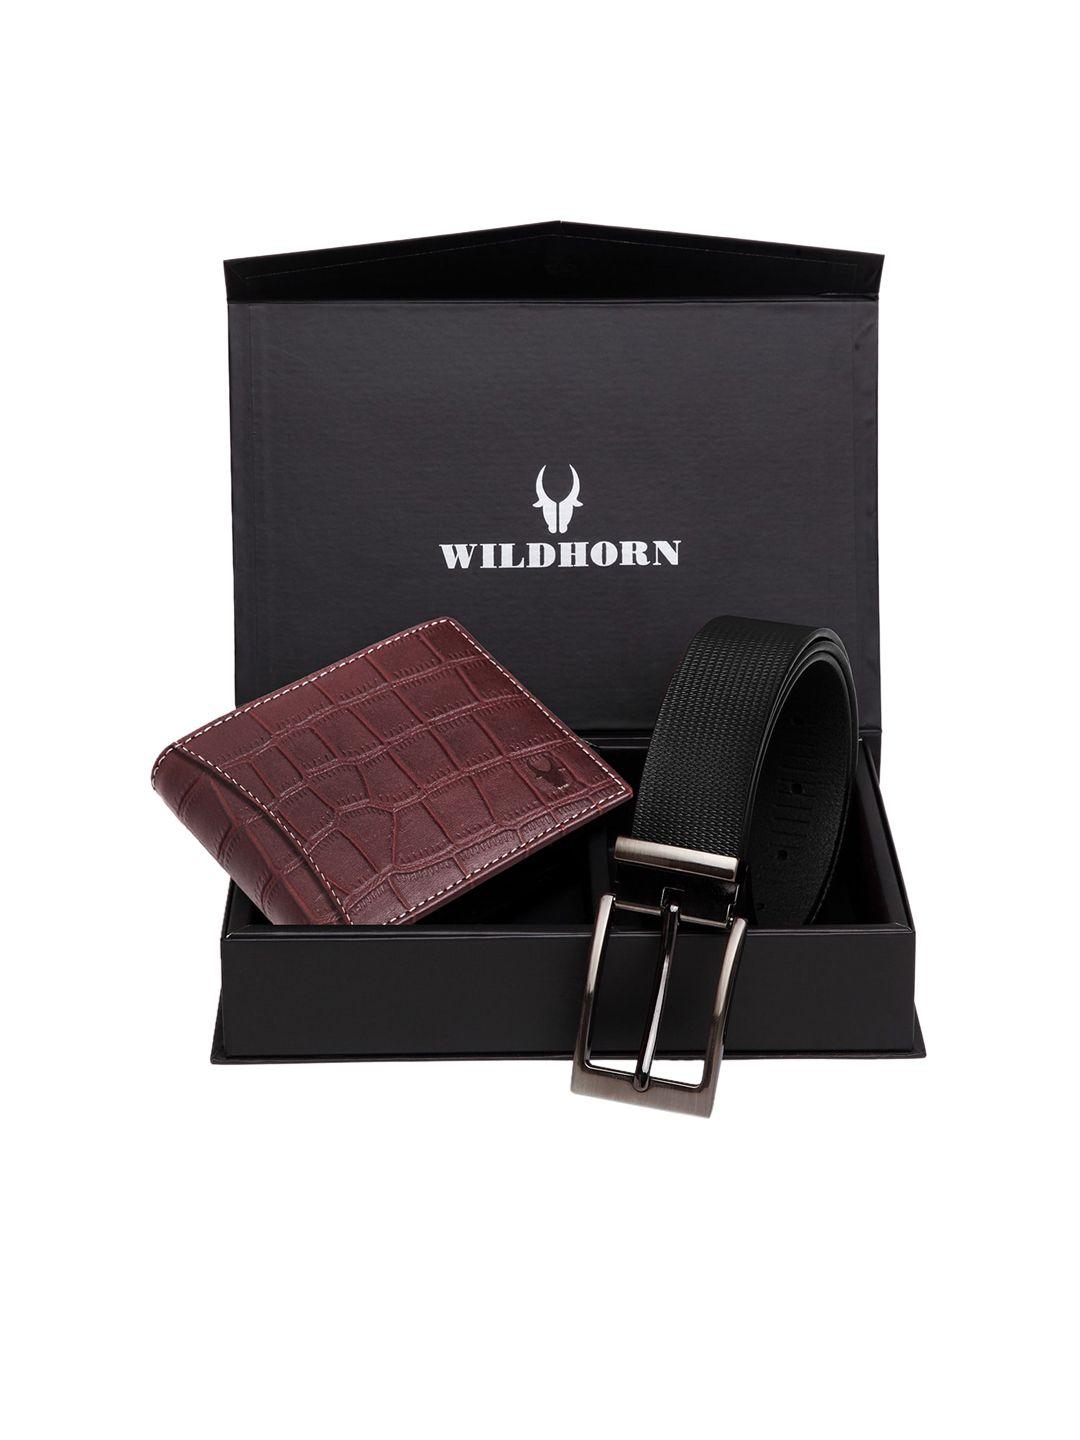 wildhorn men maroon & black rfid protected genuine leather accessory gift set